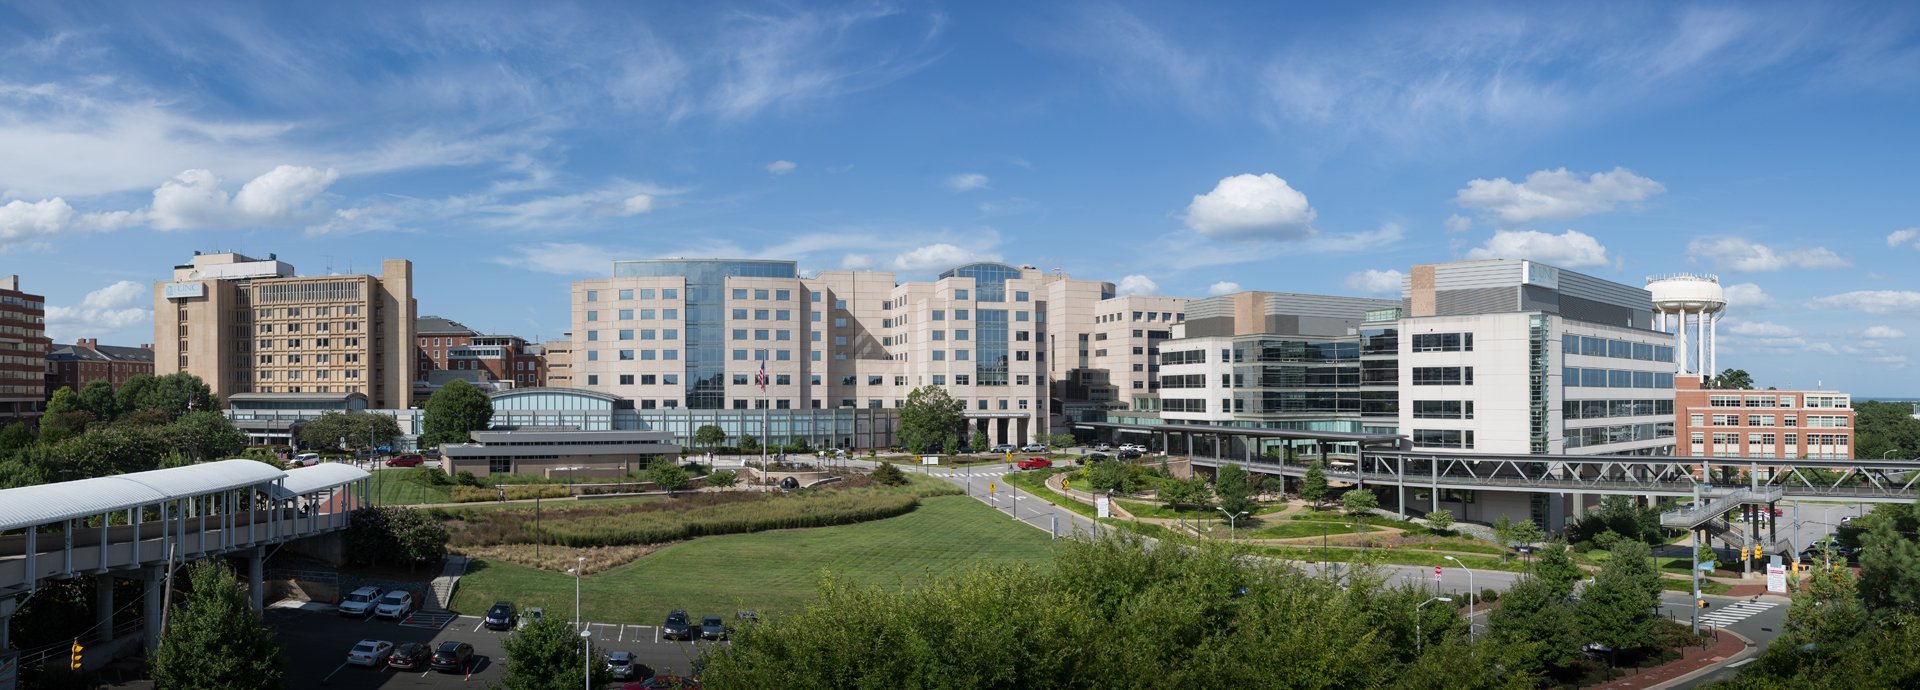 img-locations-unc-hospitals-panoramic